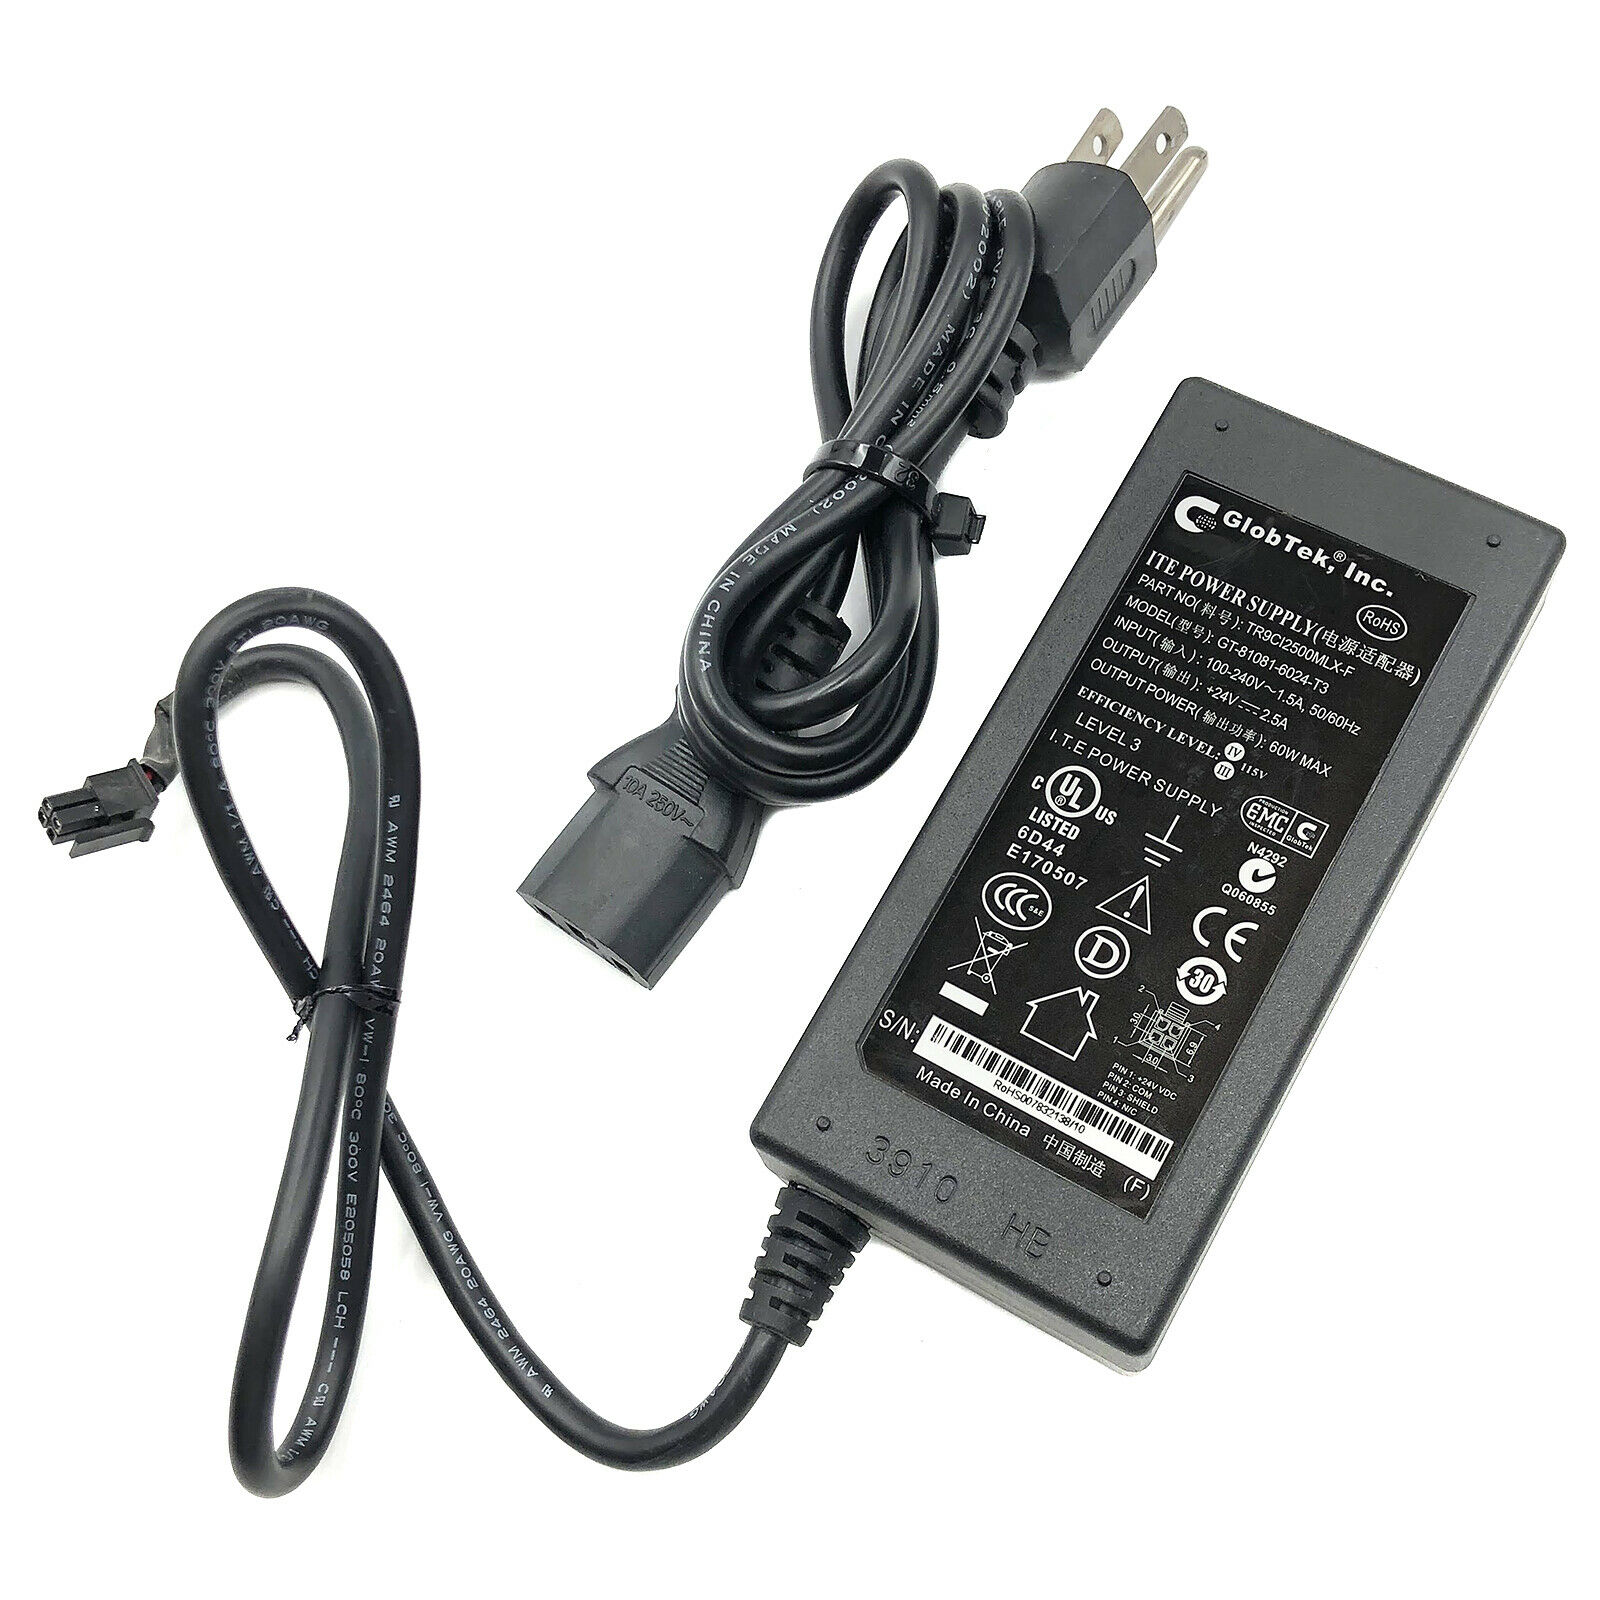 Genuine Globtek GT-81081-6024-T3 AC Adapter 24V Power Supply ATX 4 Pin w/PC OEM Color: Black Brand: Globtek Cable Le